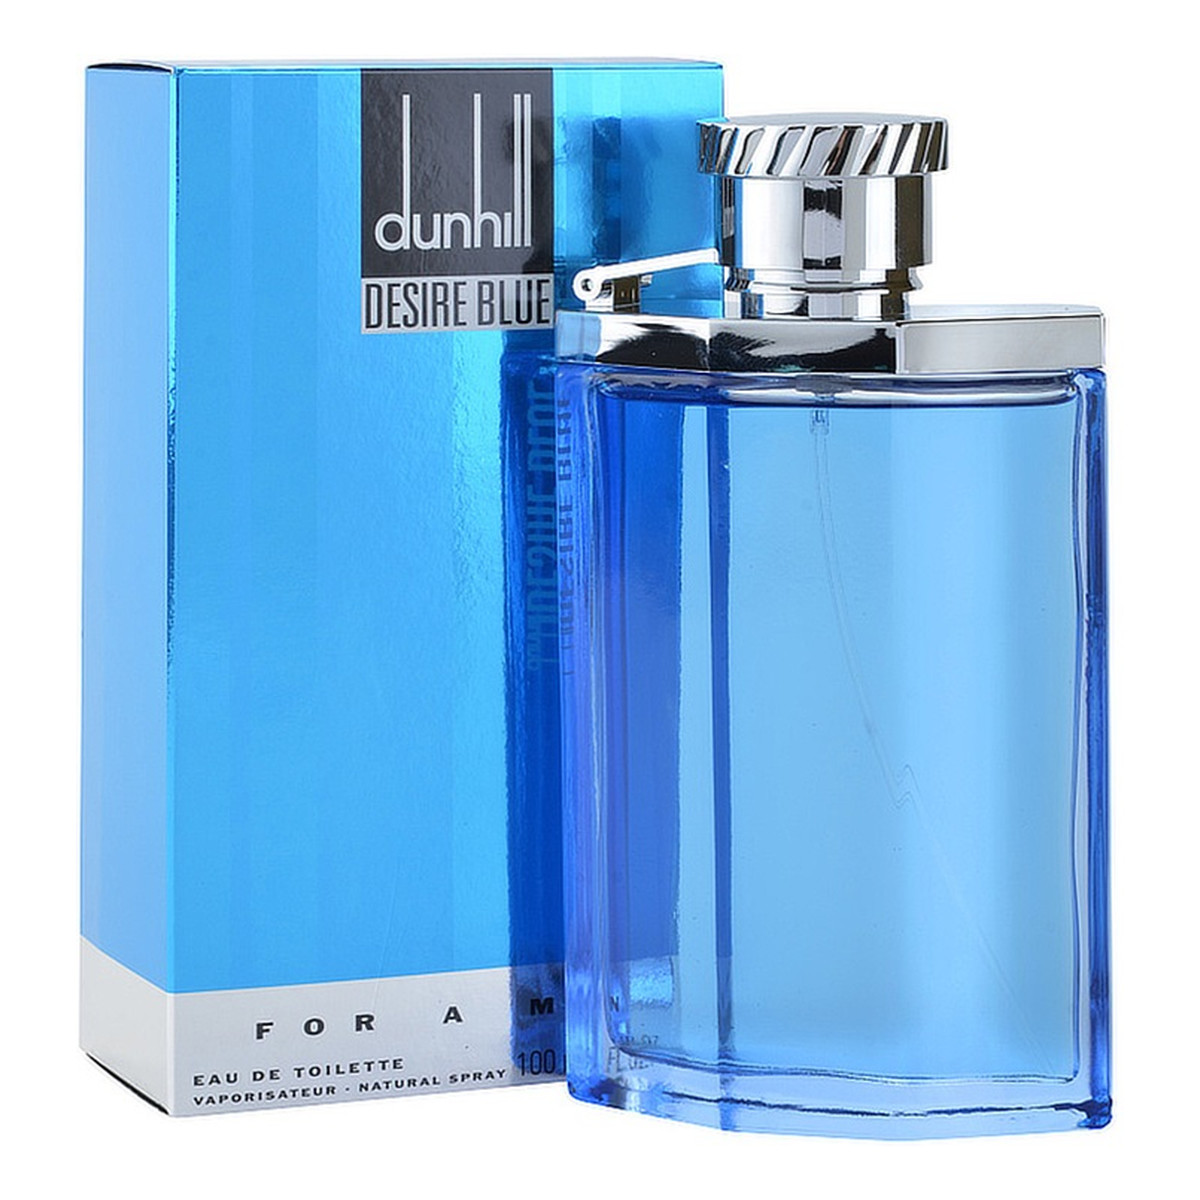 Dunhill Desire Blue Woda Toaletowa 100ml